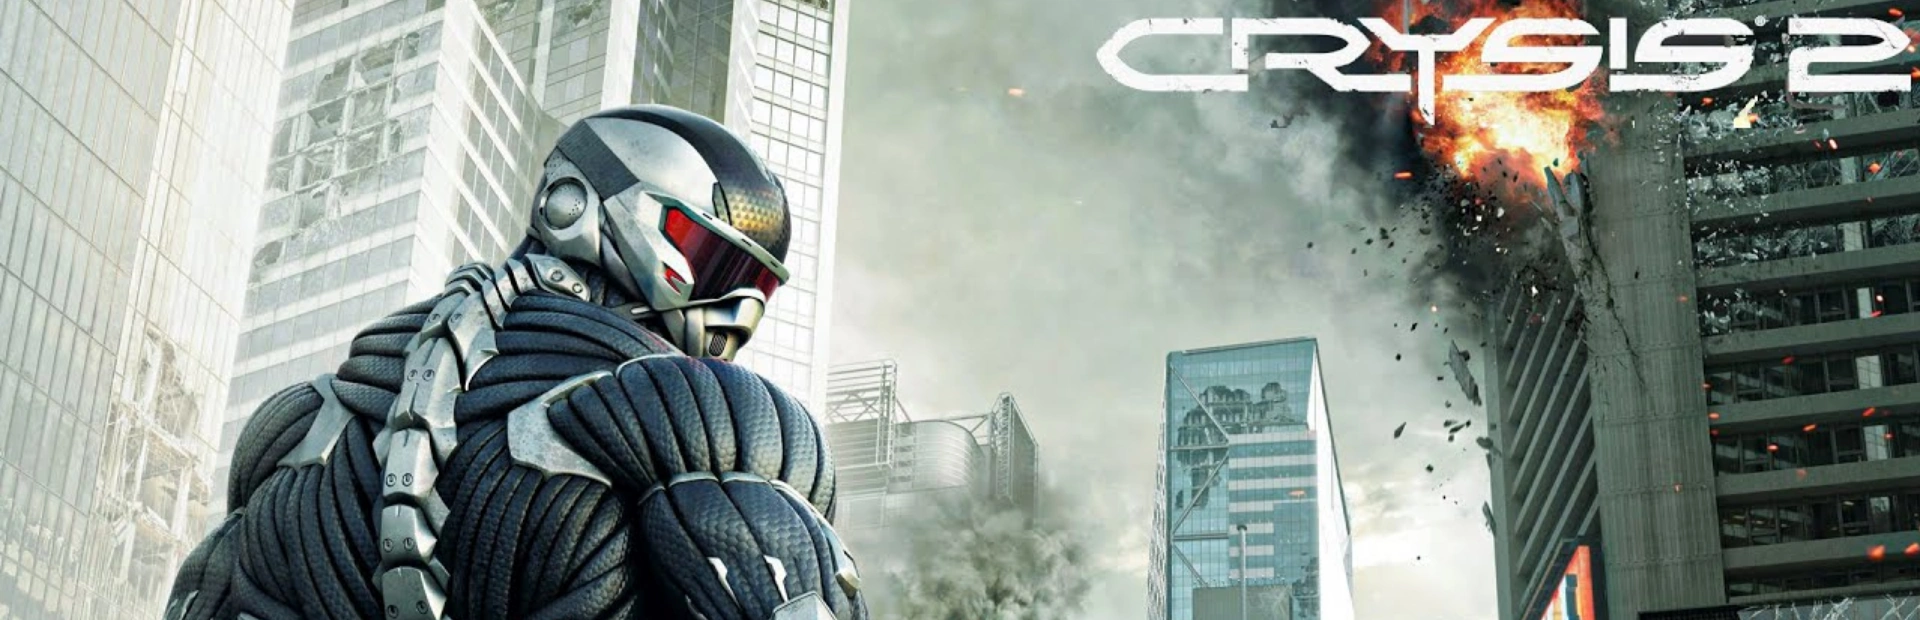 Crysis 2 Maximum Edition.banner1